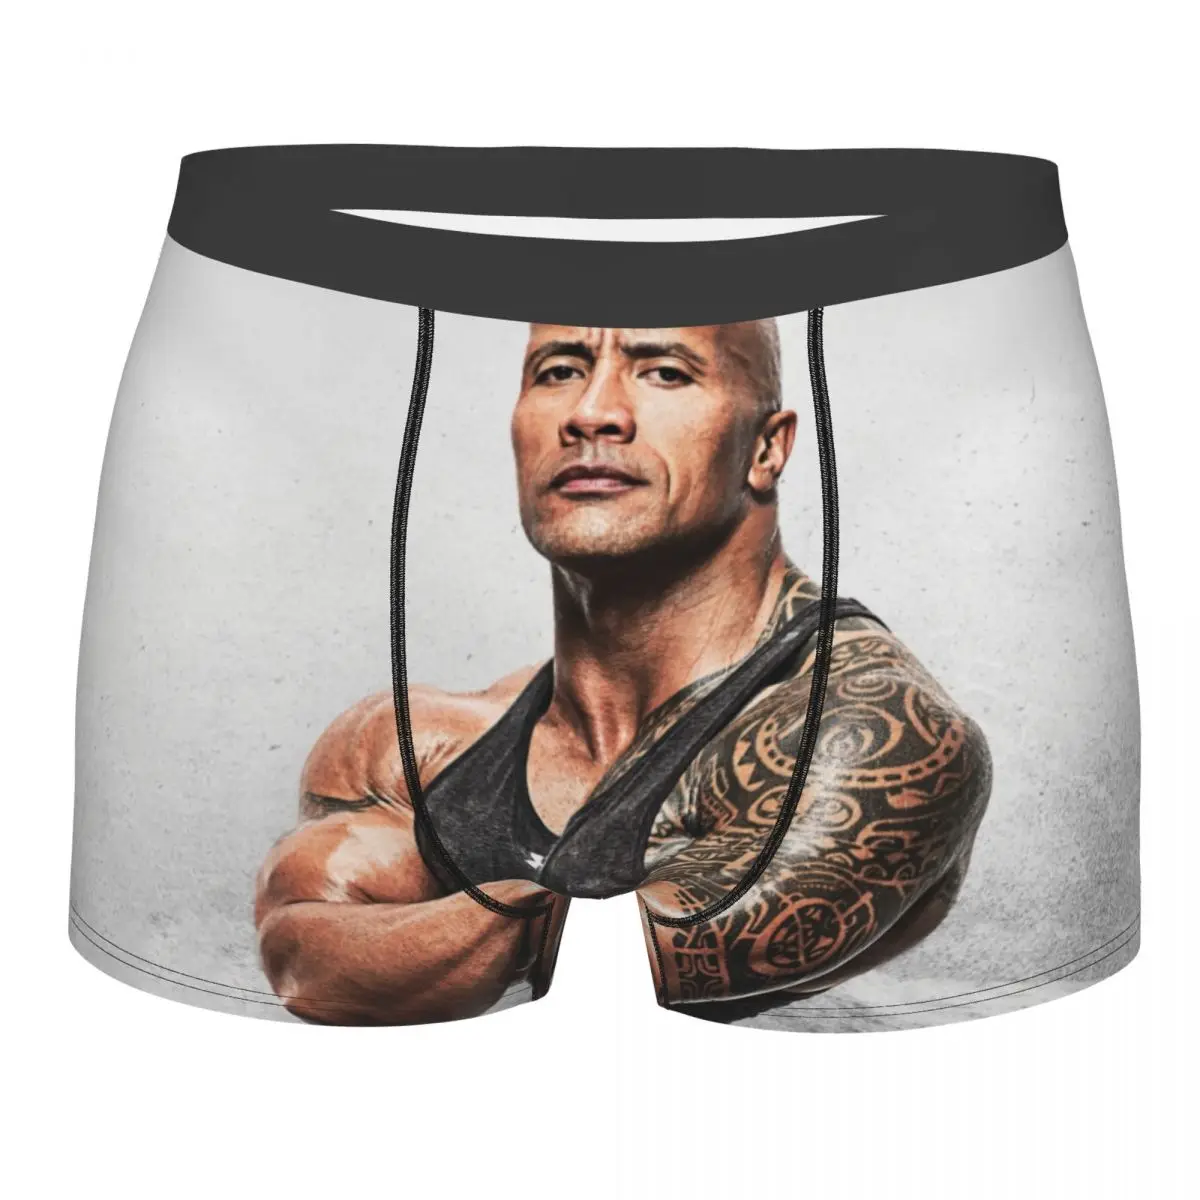 

Custom The Rock Face Dwayne Boxers Shorts Mens Famous Actor Johnson Briefs Underwear Fashion Underpants